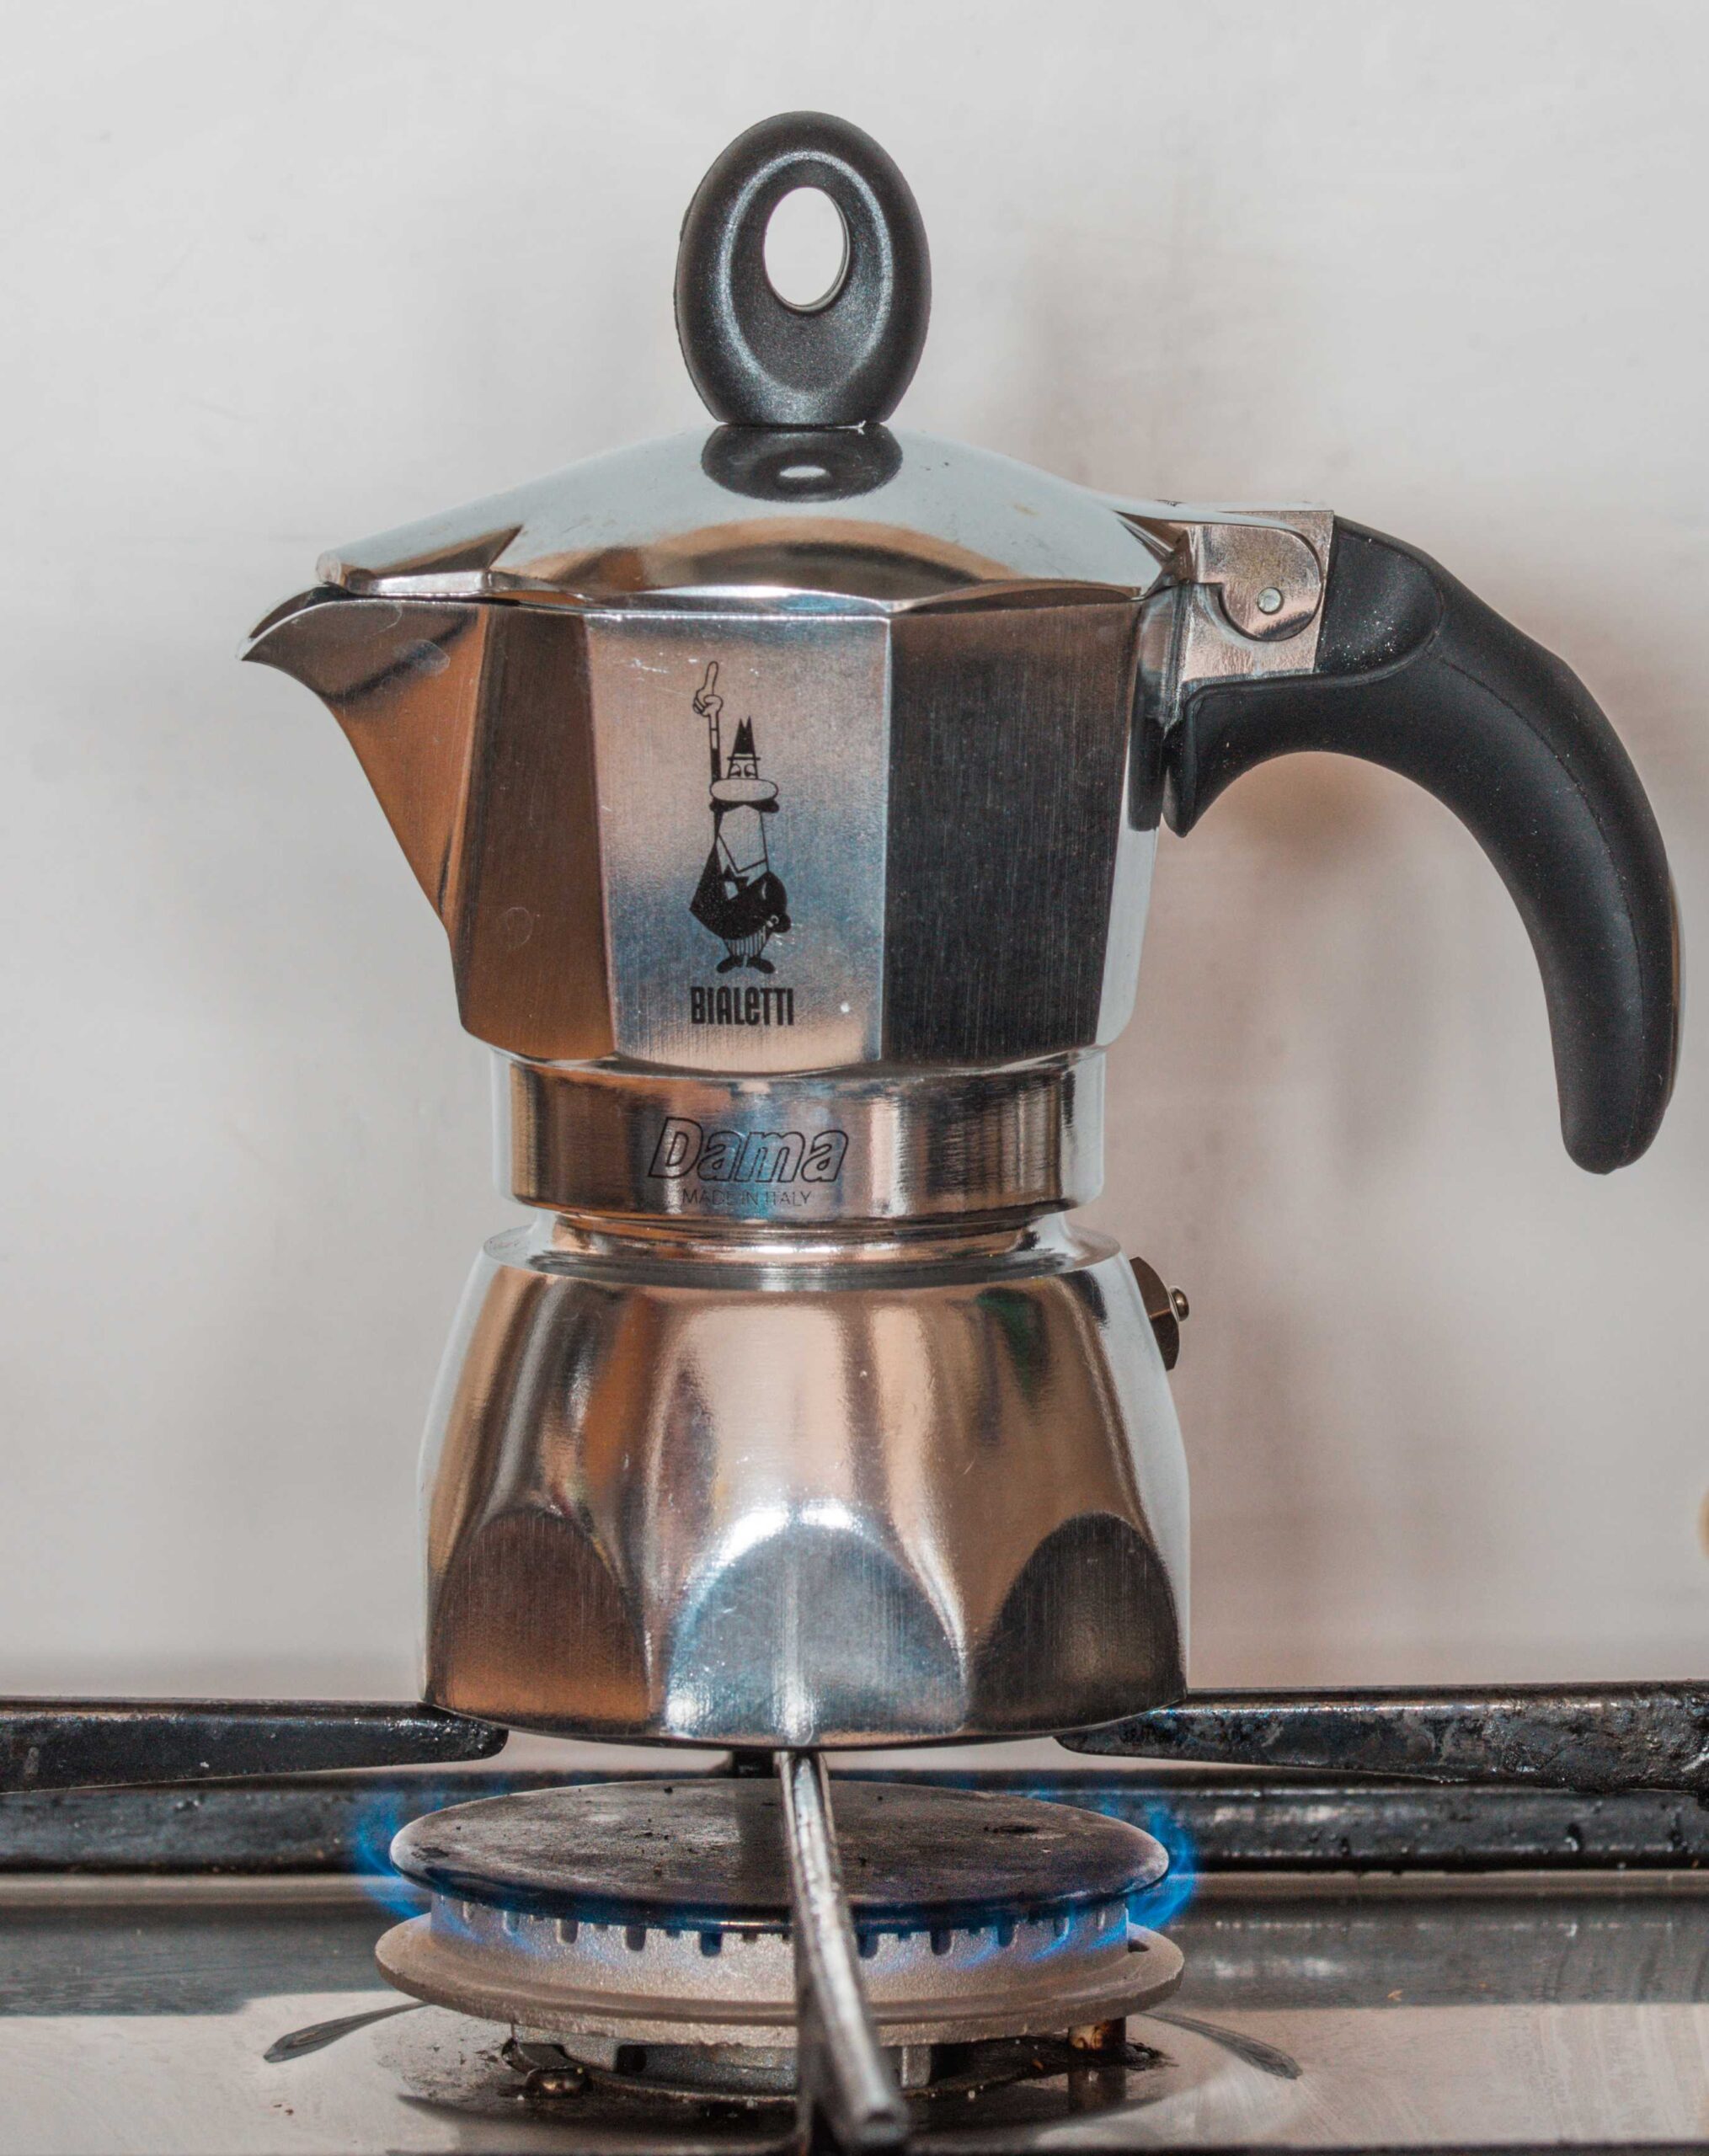 Bialetti Brikka Stove Top Espresso Coffee Maker with Pressurized